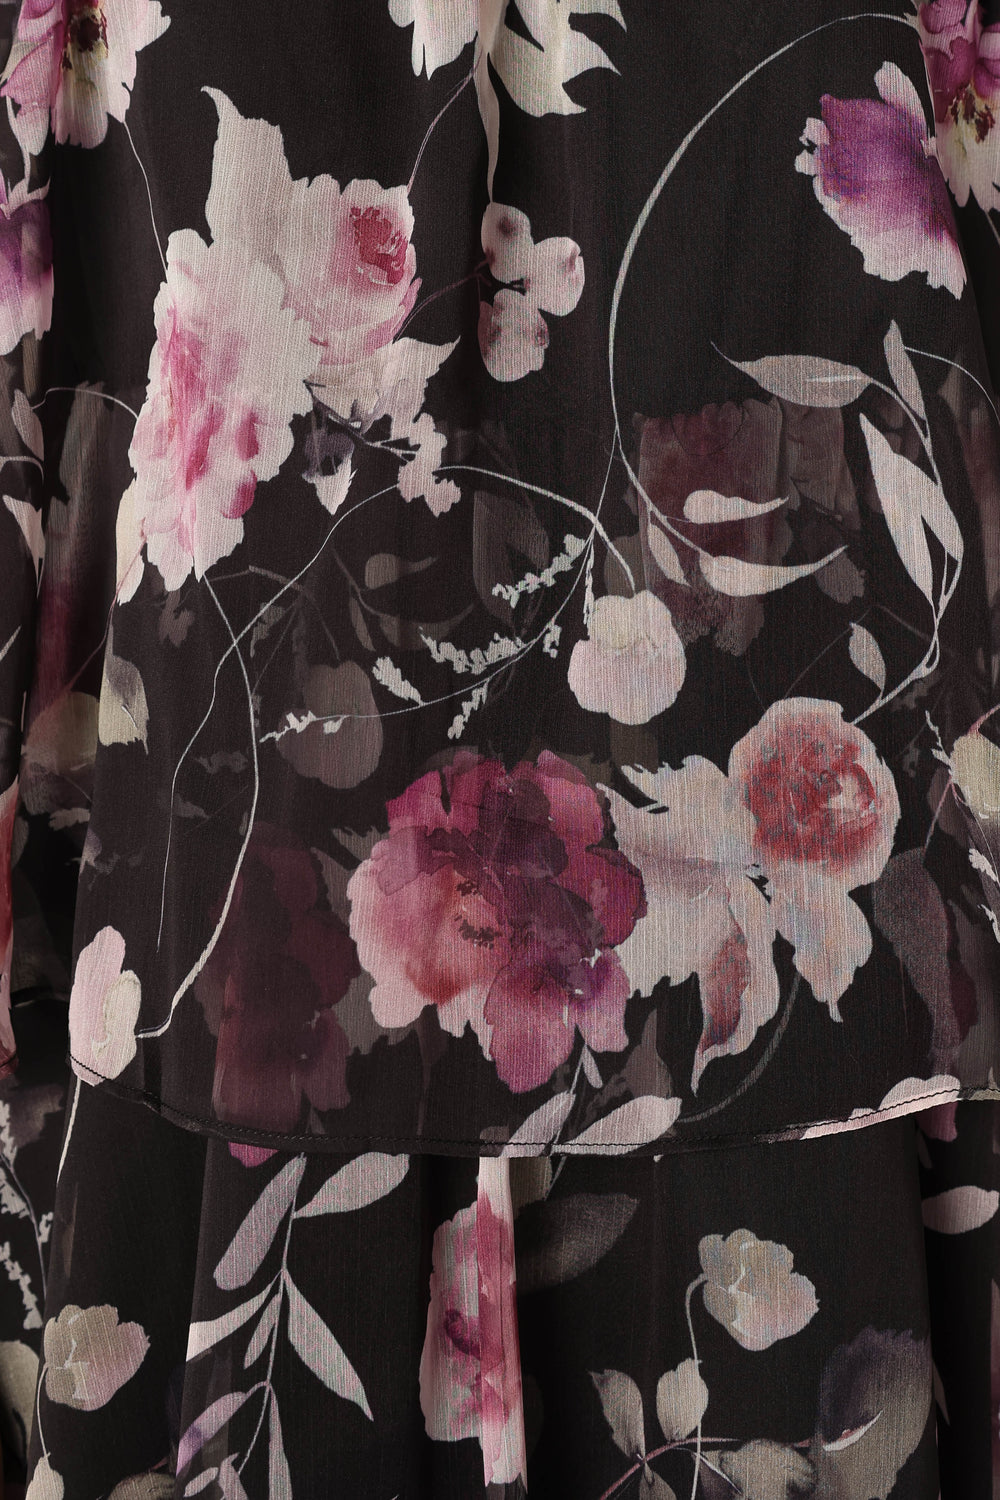 Petal and Pup USA DRESSES Bloom Strapless Maxi Dress - Black Floral